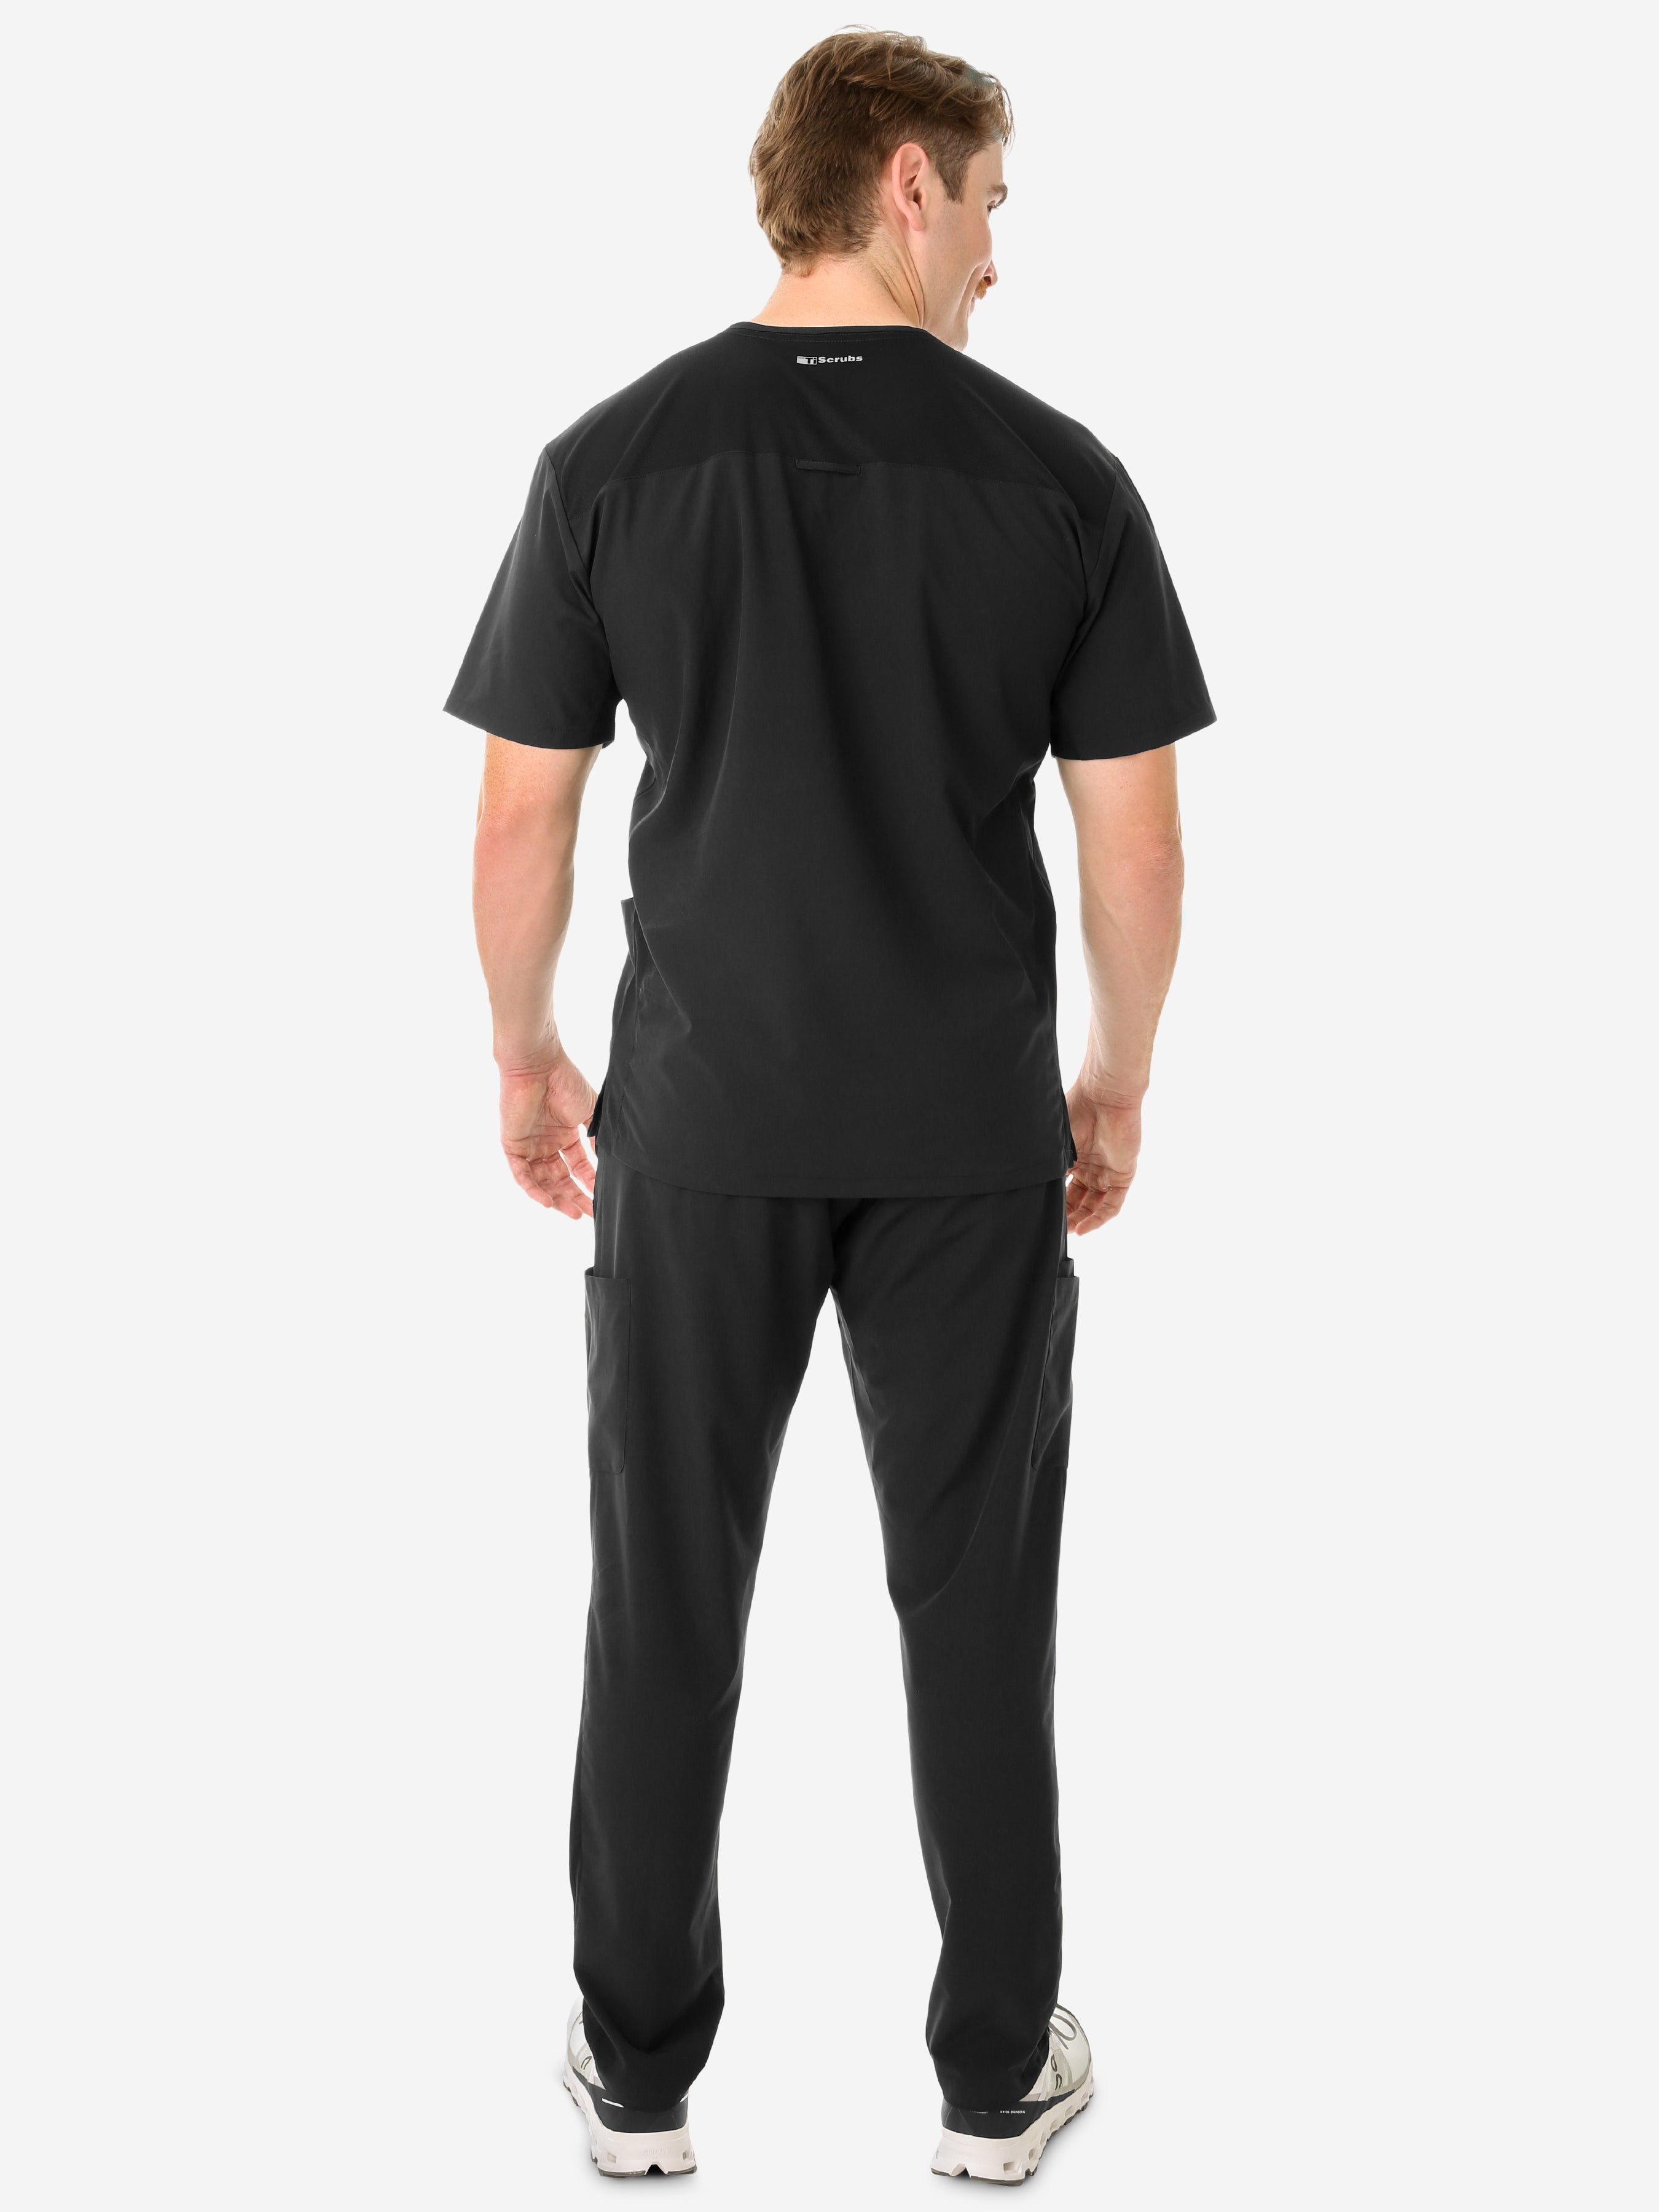 Men&#39;s Real Black Five-Pocket Scrub Full Body Back View with 9-Pocket Pants